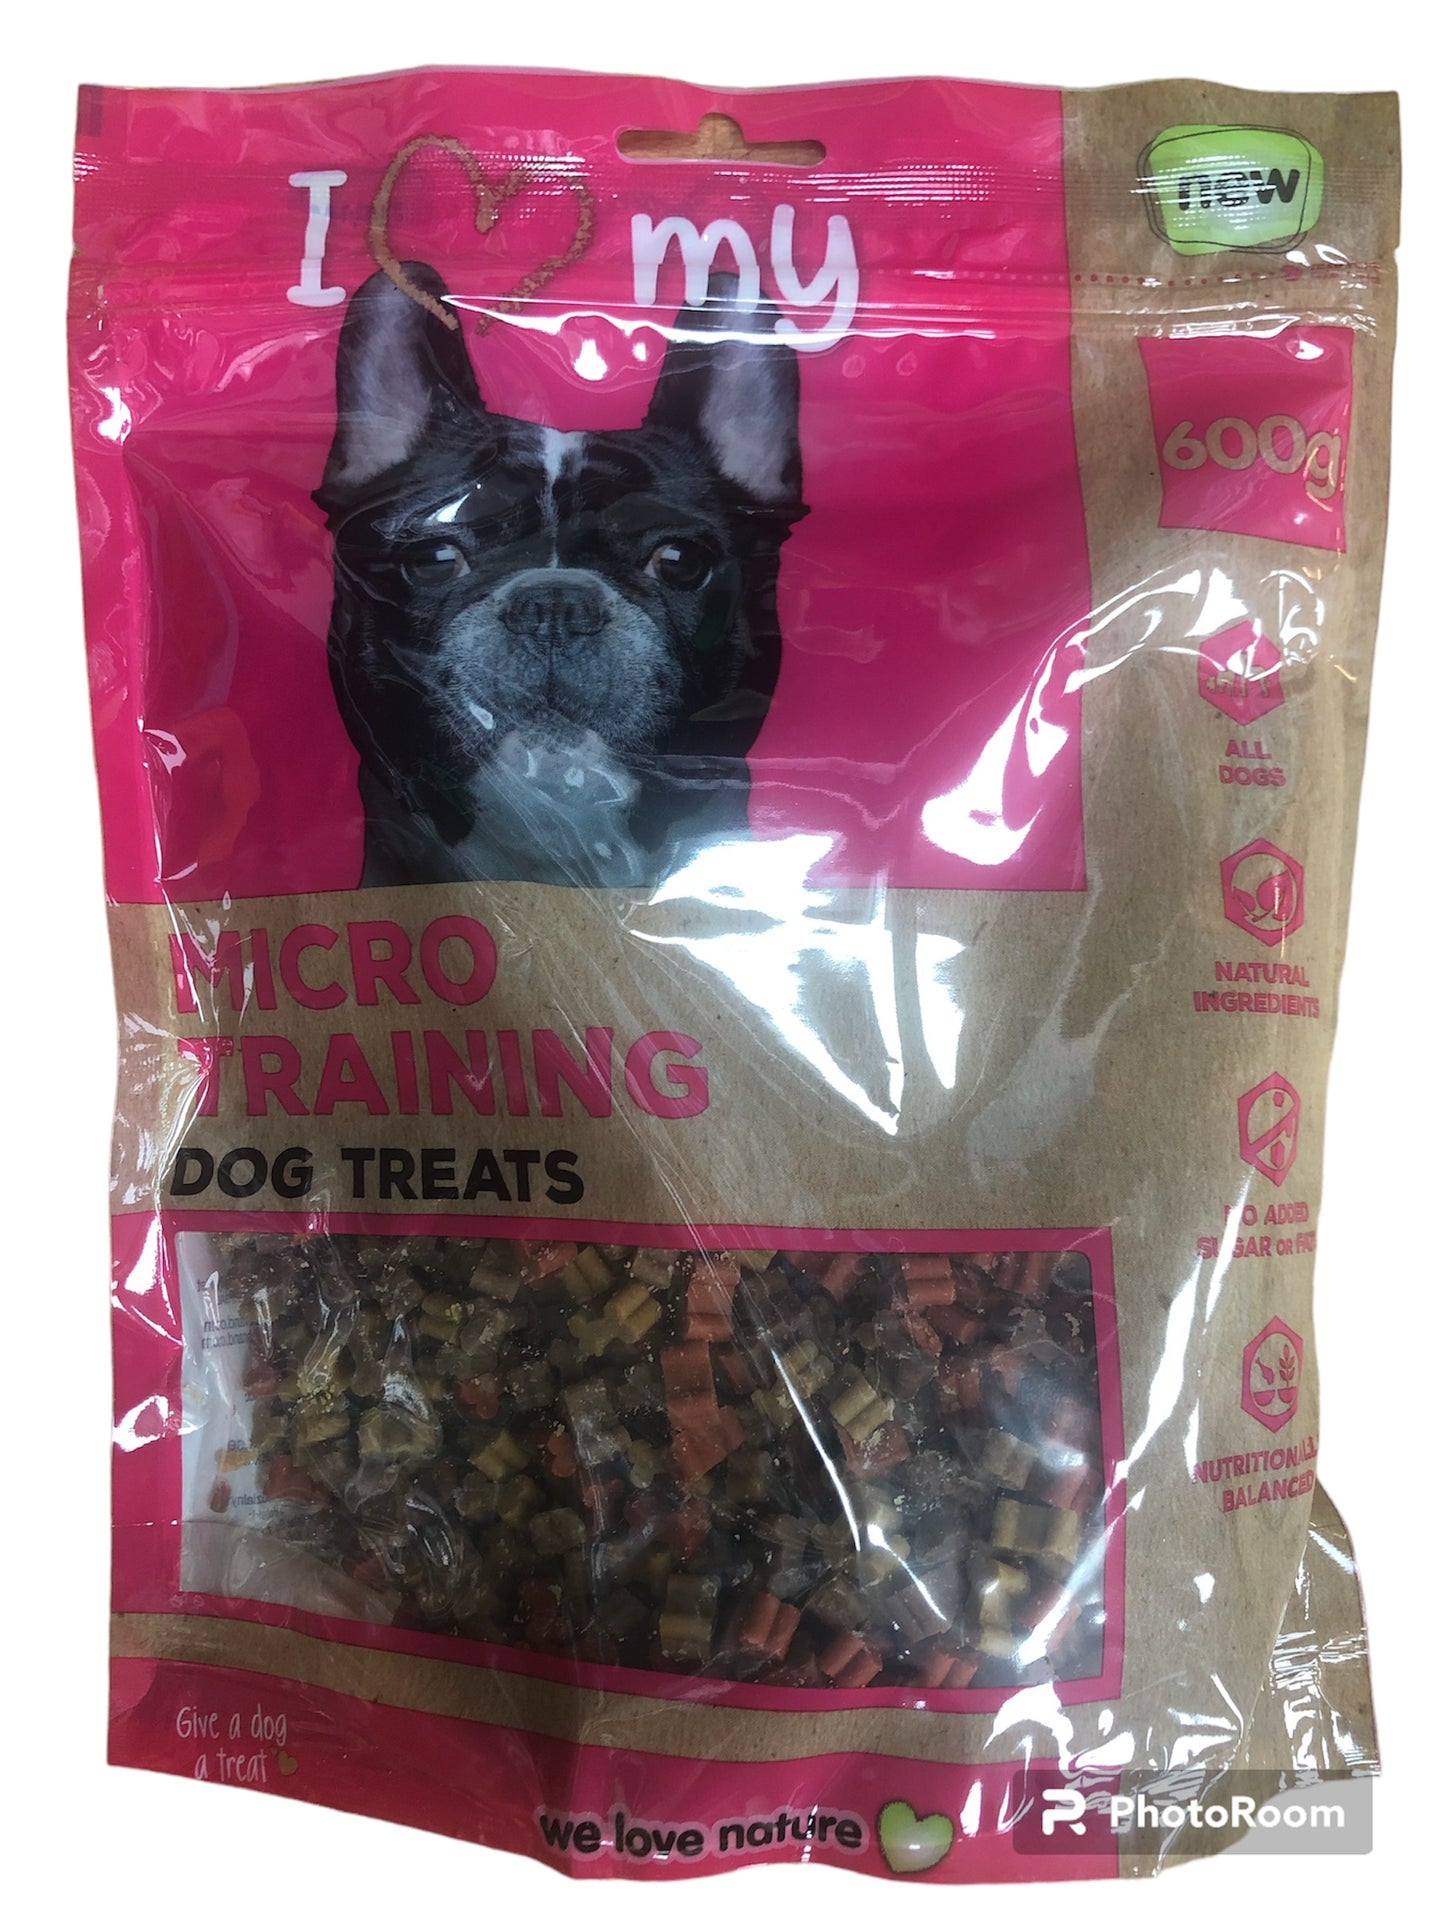 Micro training dog treats 600g